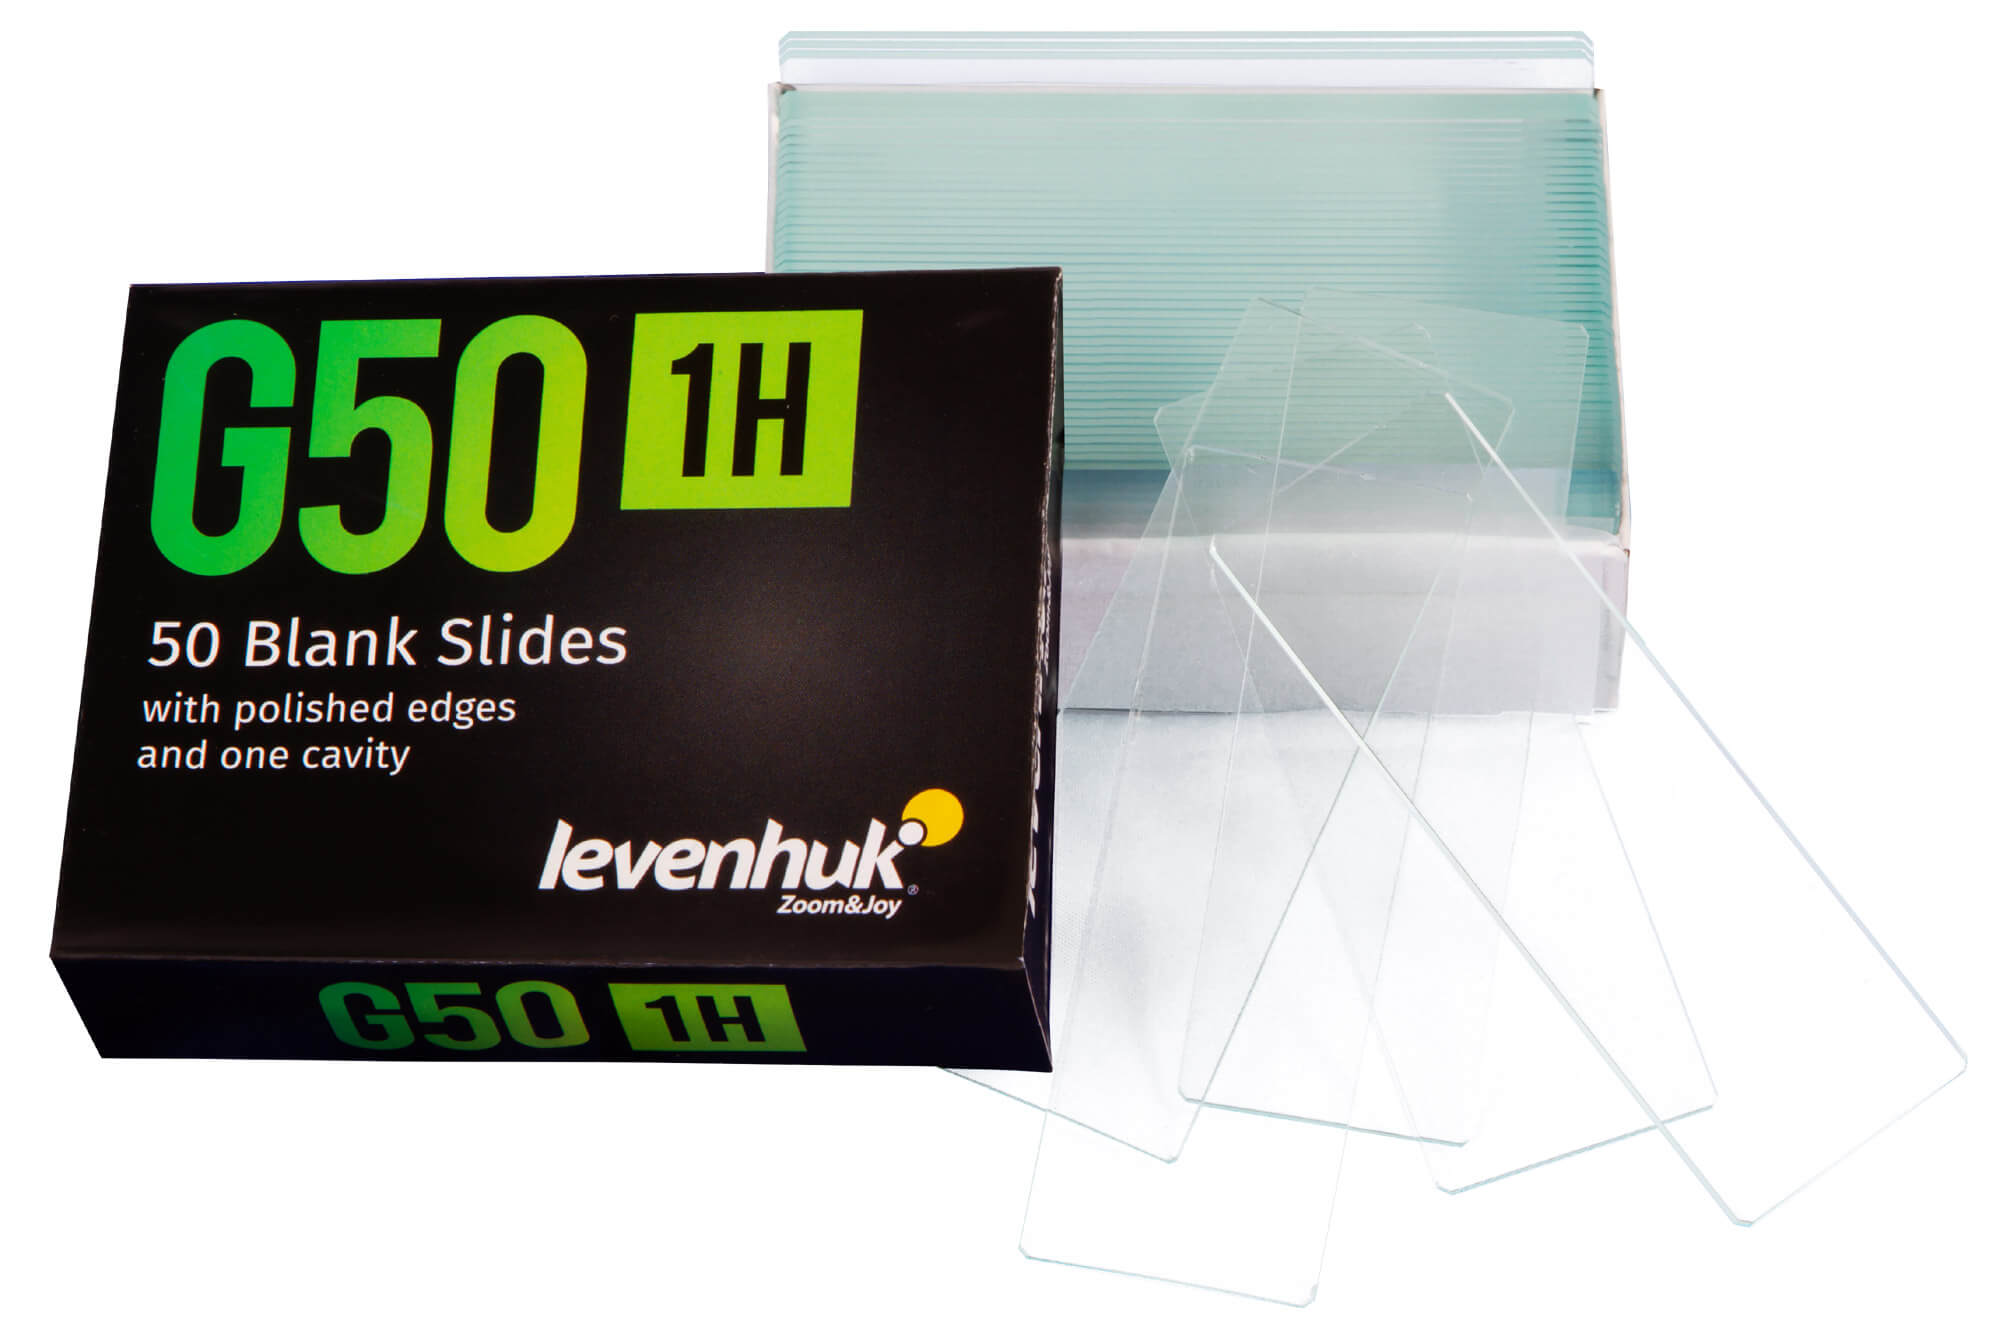 Čisté jednodutinové sklíčka Levenhuk G50 1H, 50 ks